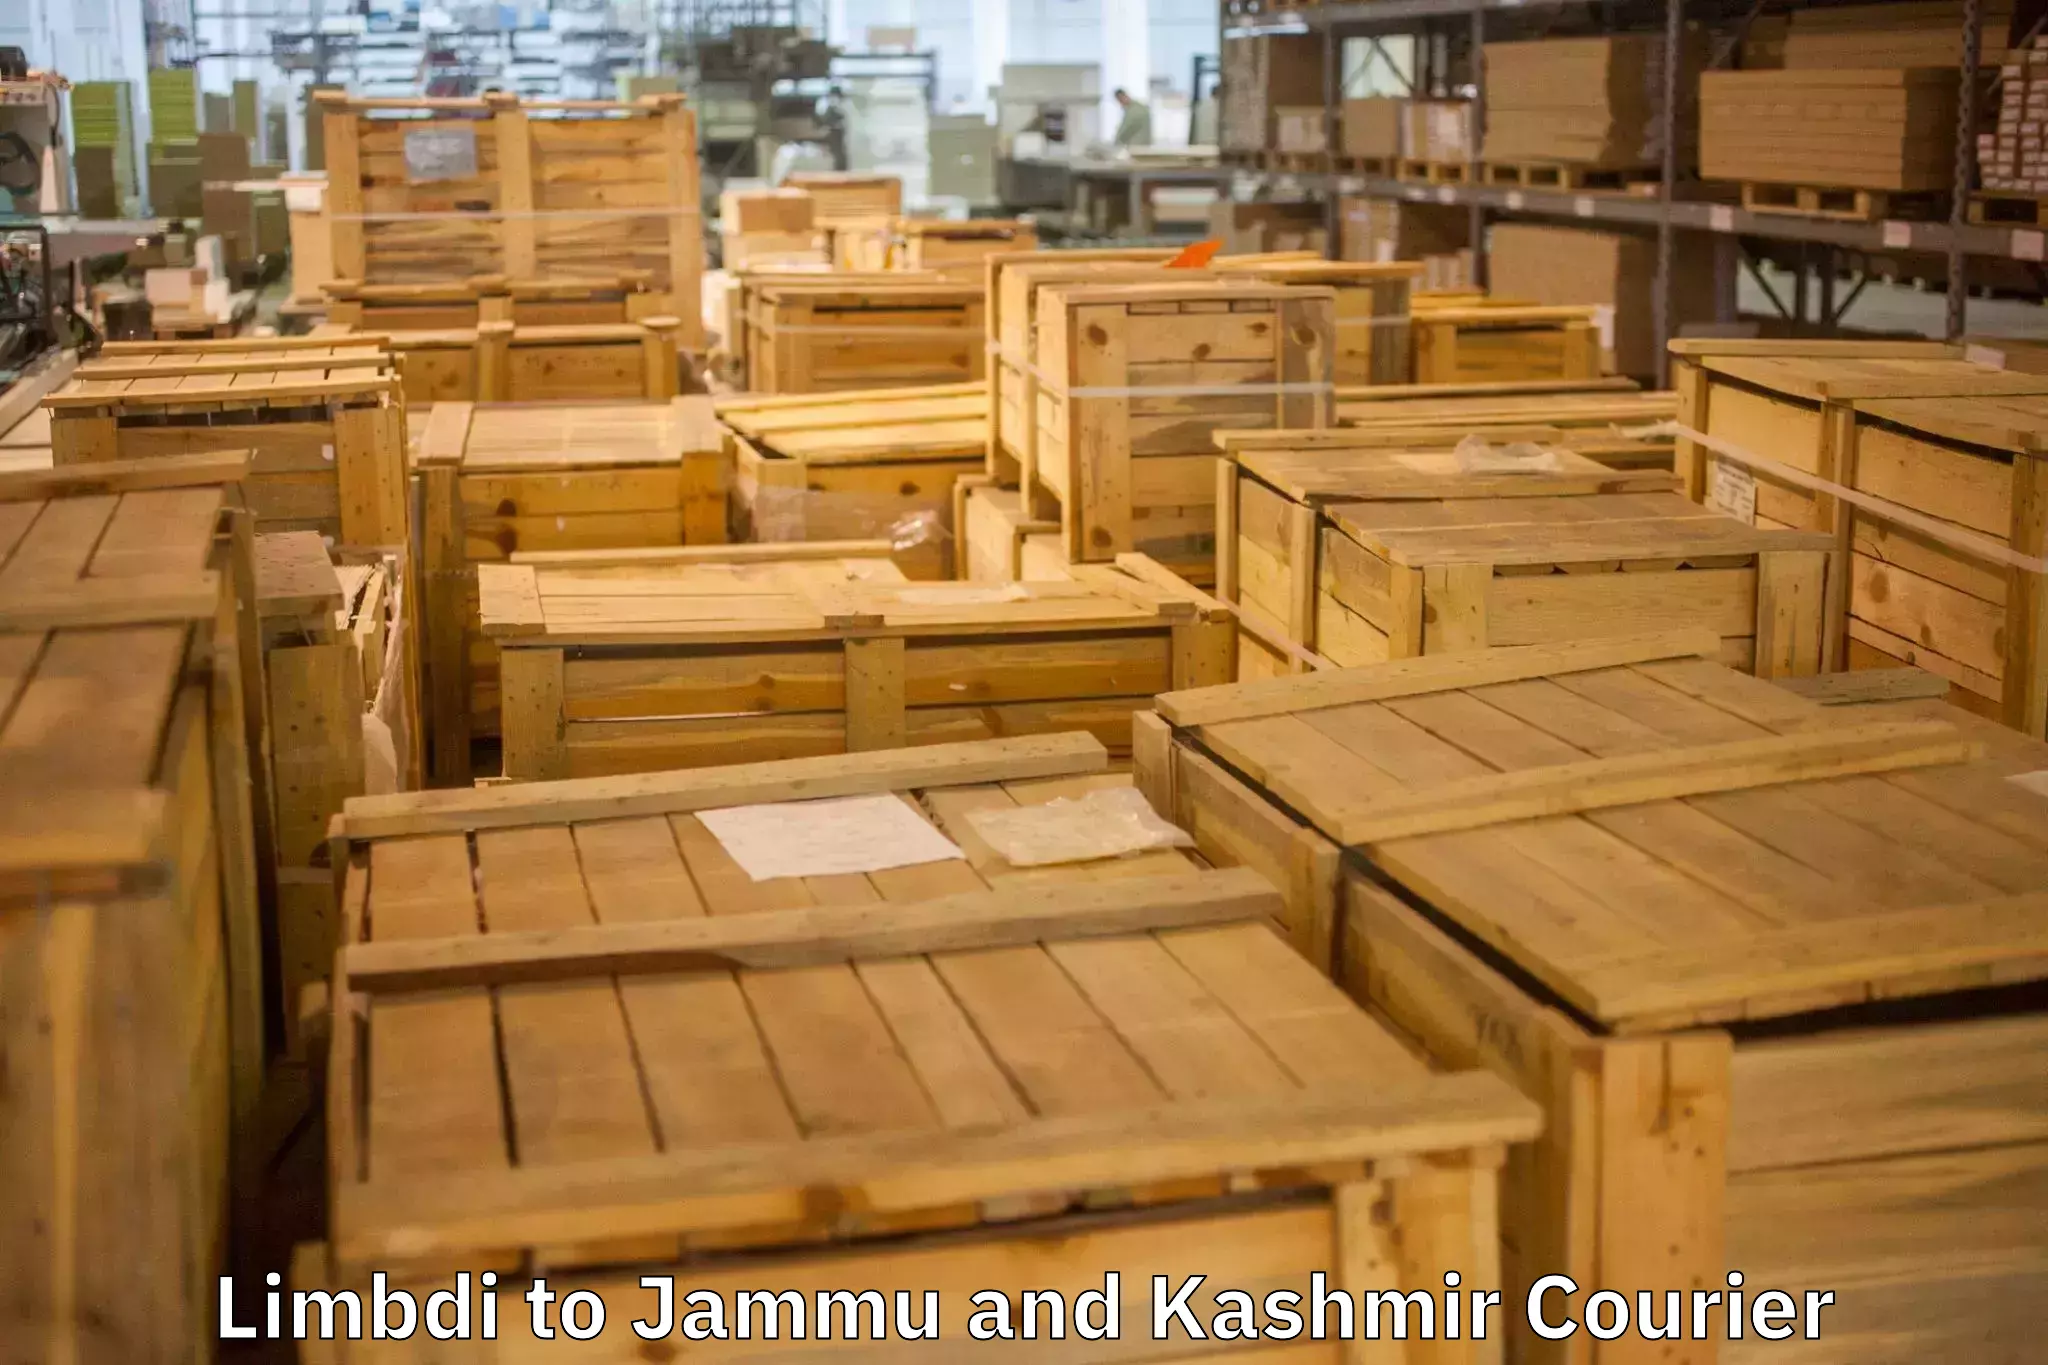 Professional moving company Limbdi to Jammu and Kashmir